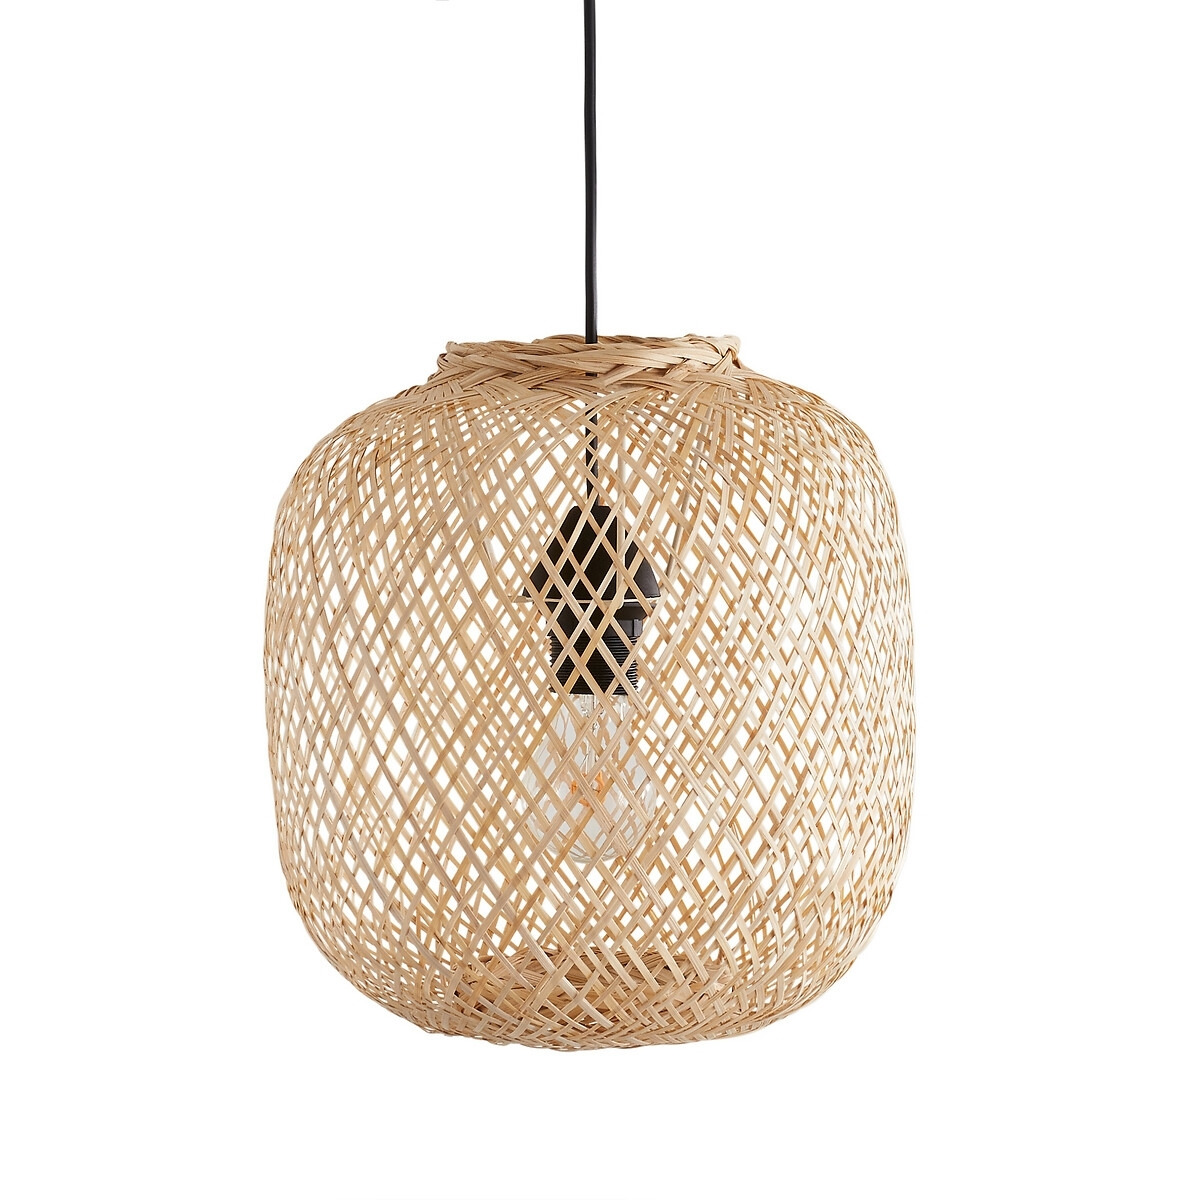 Ezia 33cm Diameter Bamboo Ceiling Light Shade - image 1